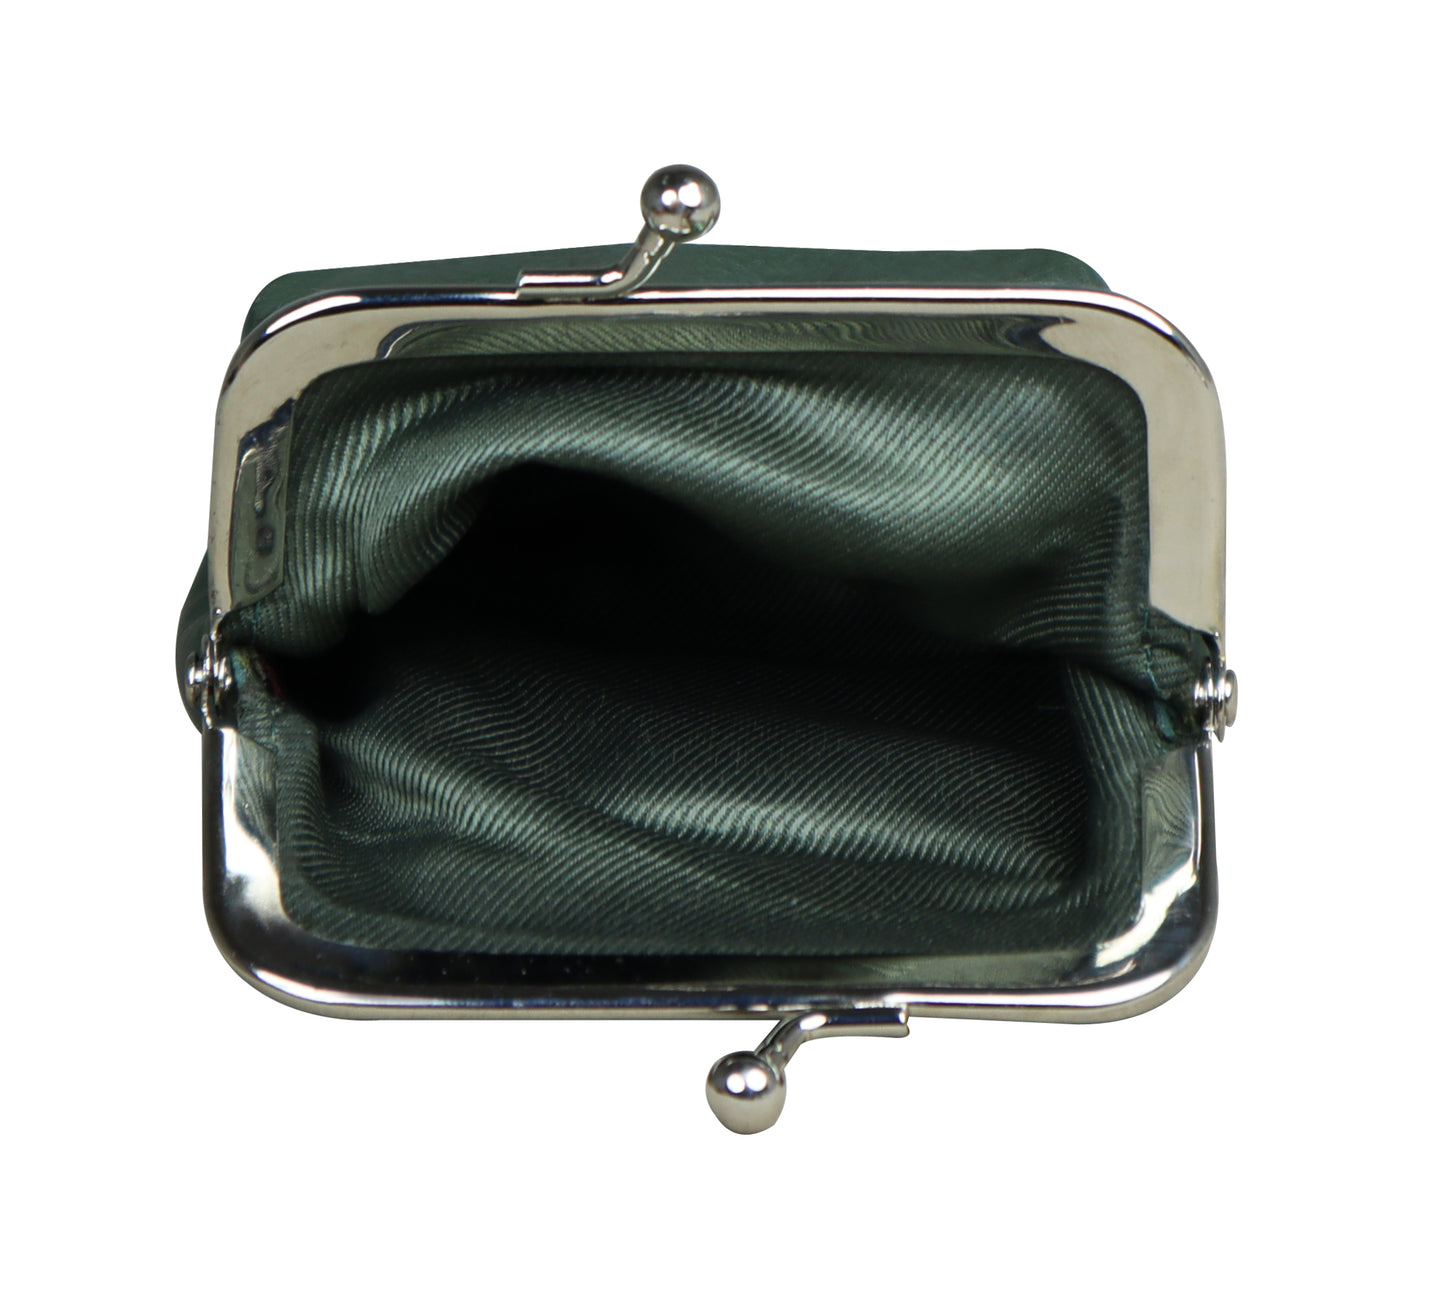 Calfnero Genuine Leather Key Case cum Coin Wallet (300-Green)